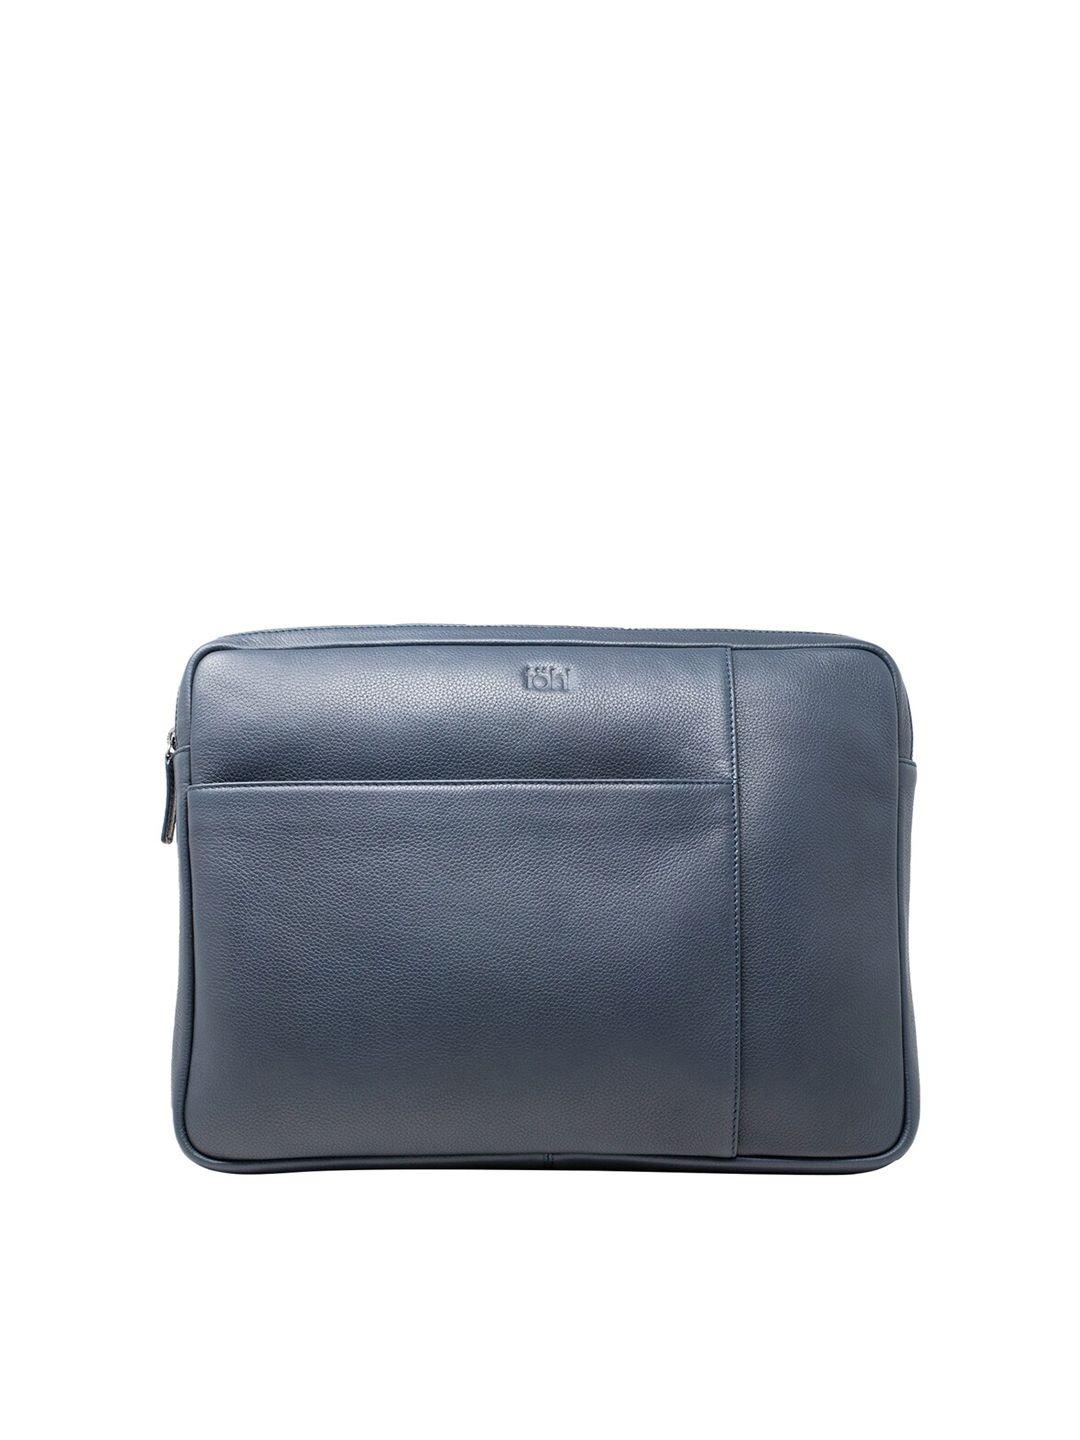 tohl unisex navy blue leather laptop sleeve